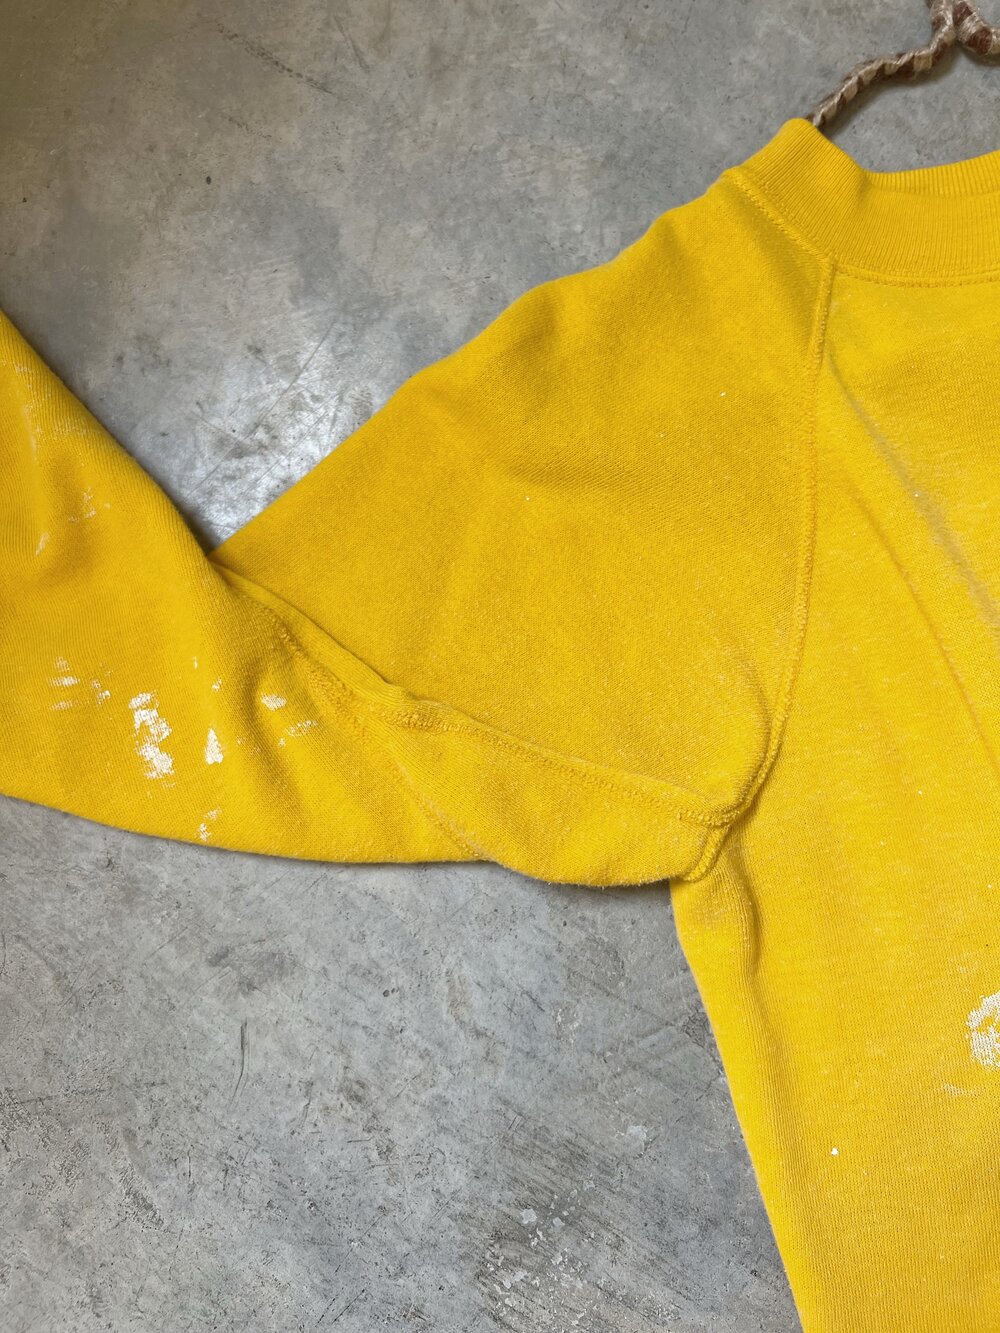 Printed Full Sleeve Ladies Mustard Yellow Hooded Sweatshirt, Size: Large